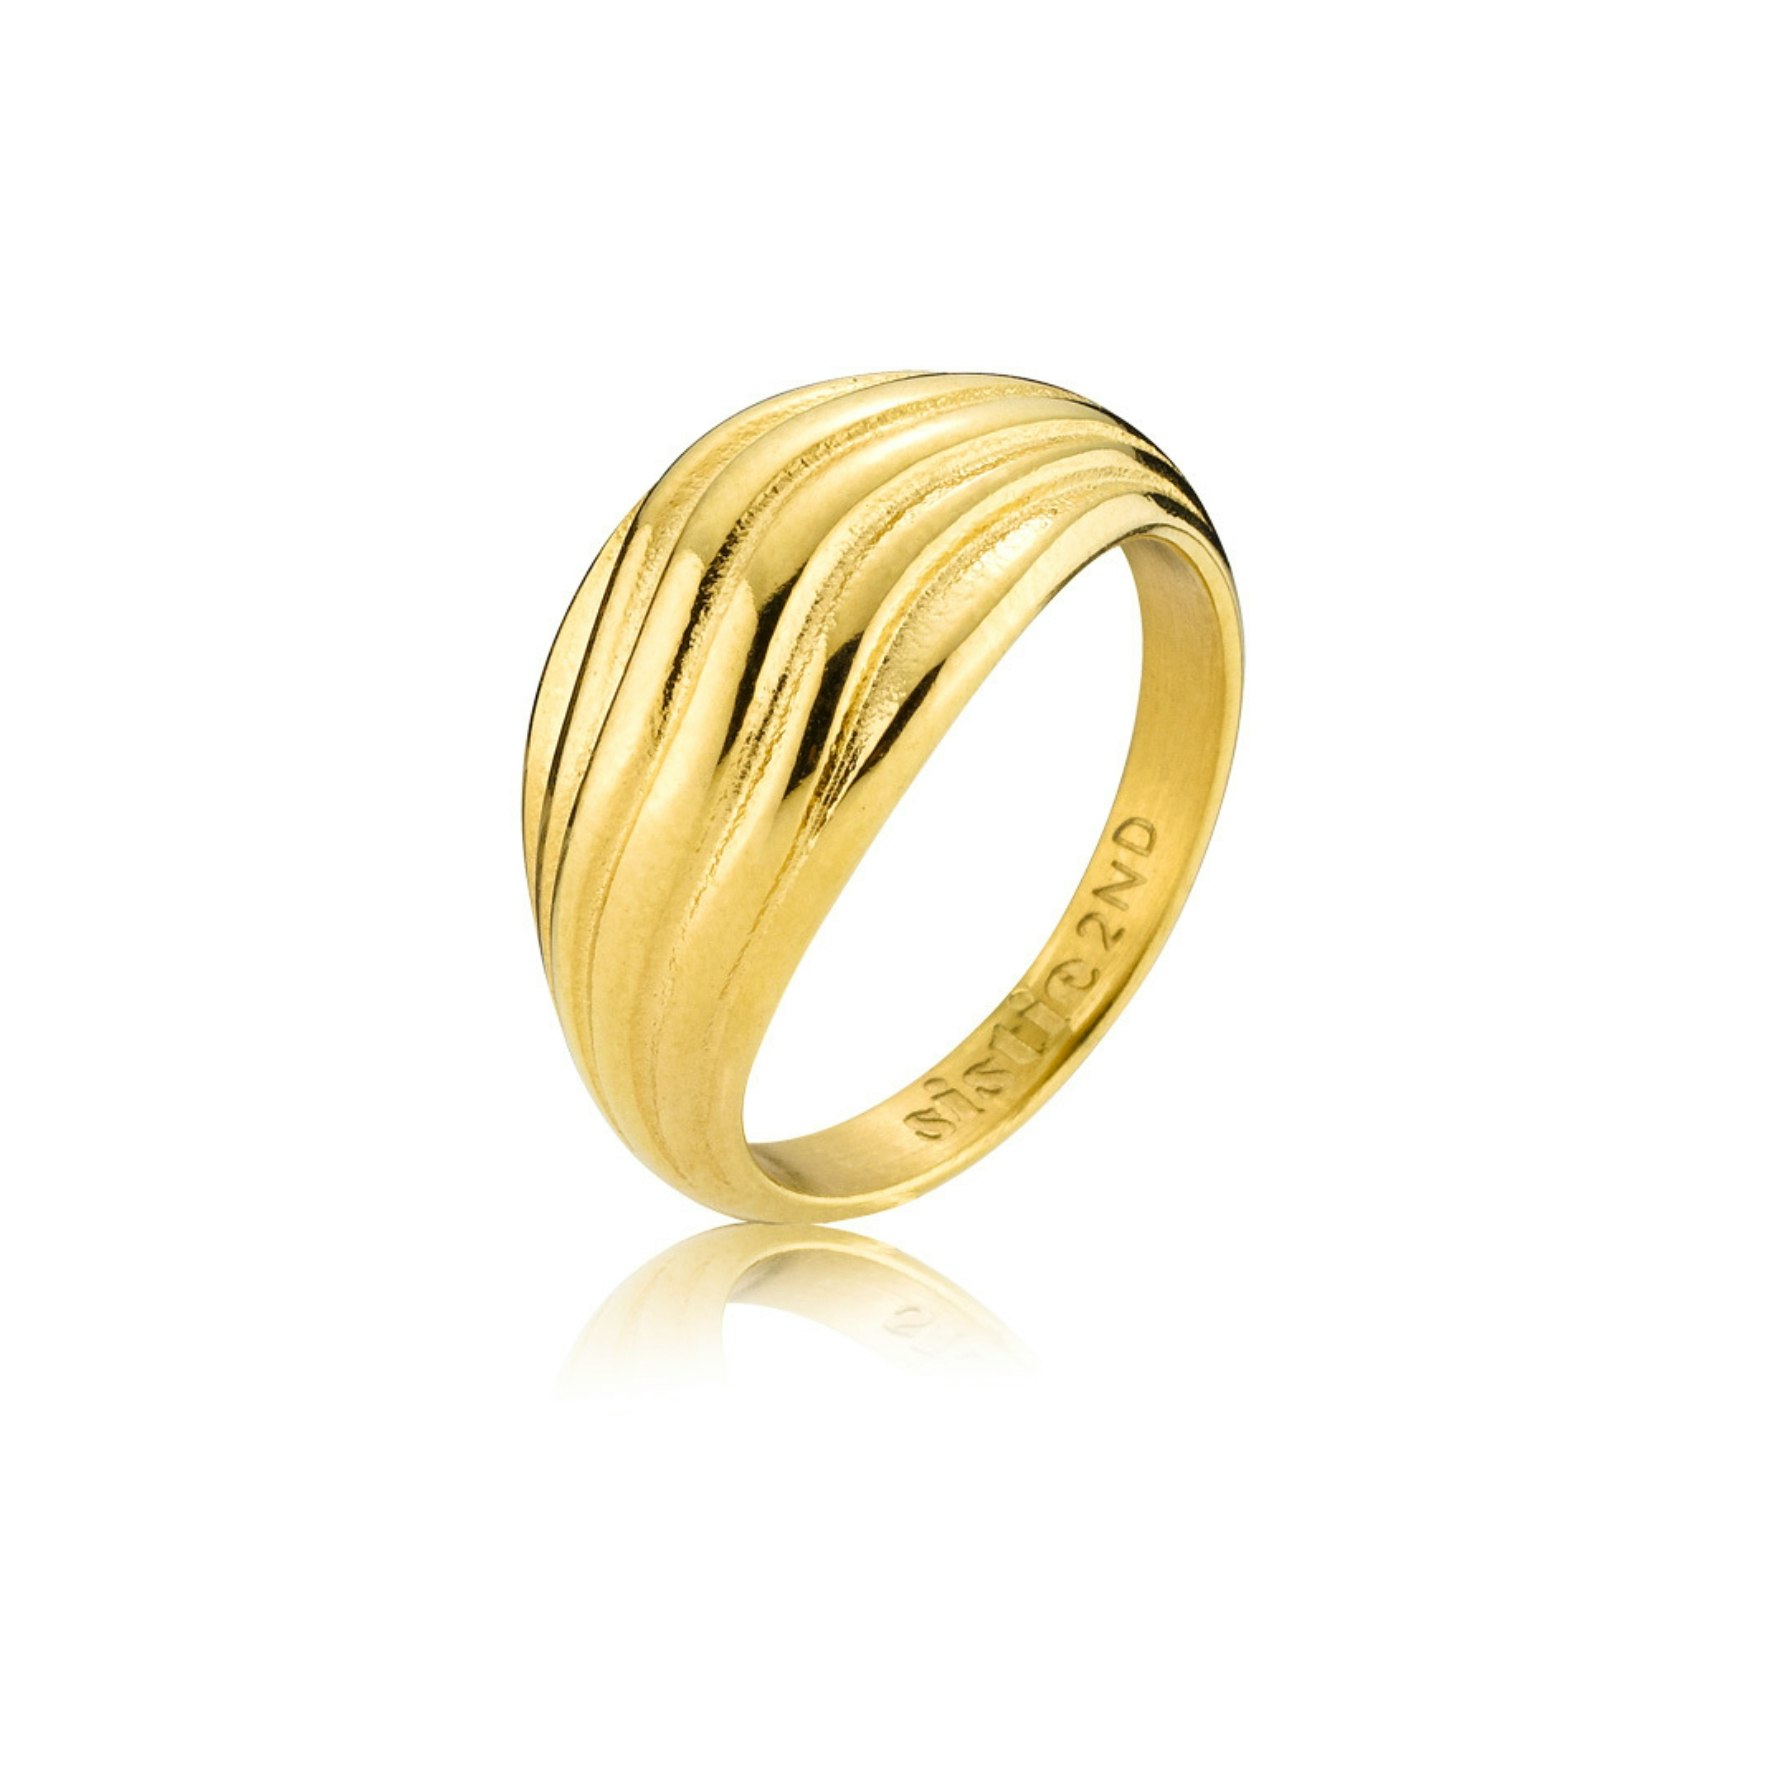 Moana Ring von Sistie 2nd in Vergoldetes Edelstahl